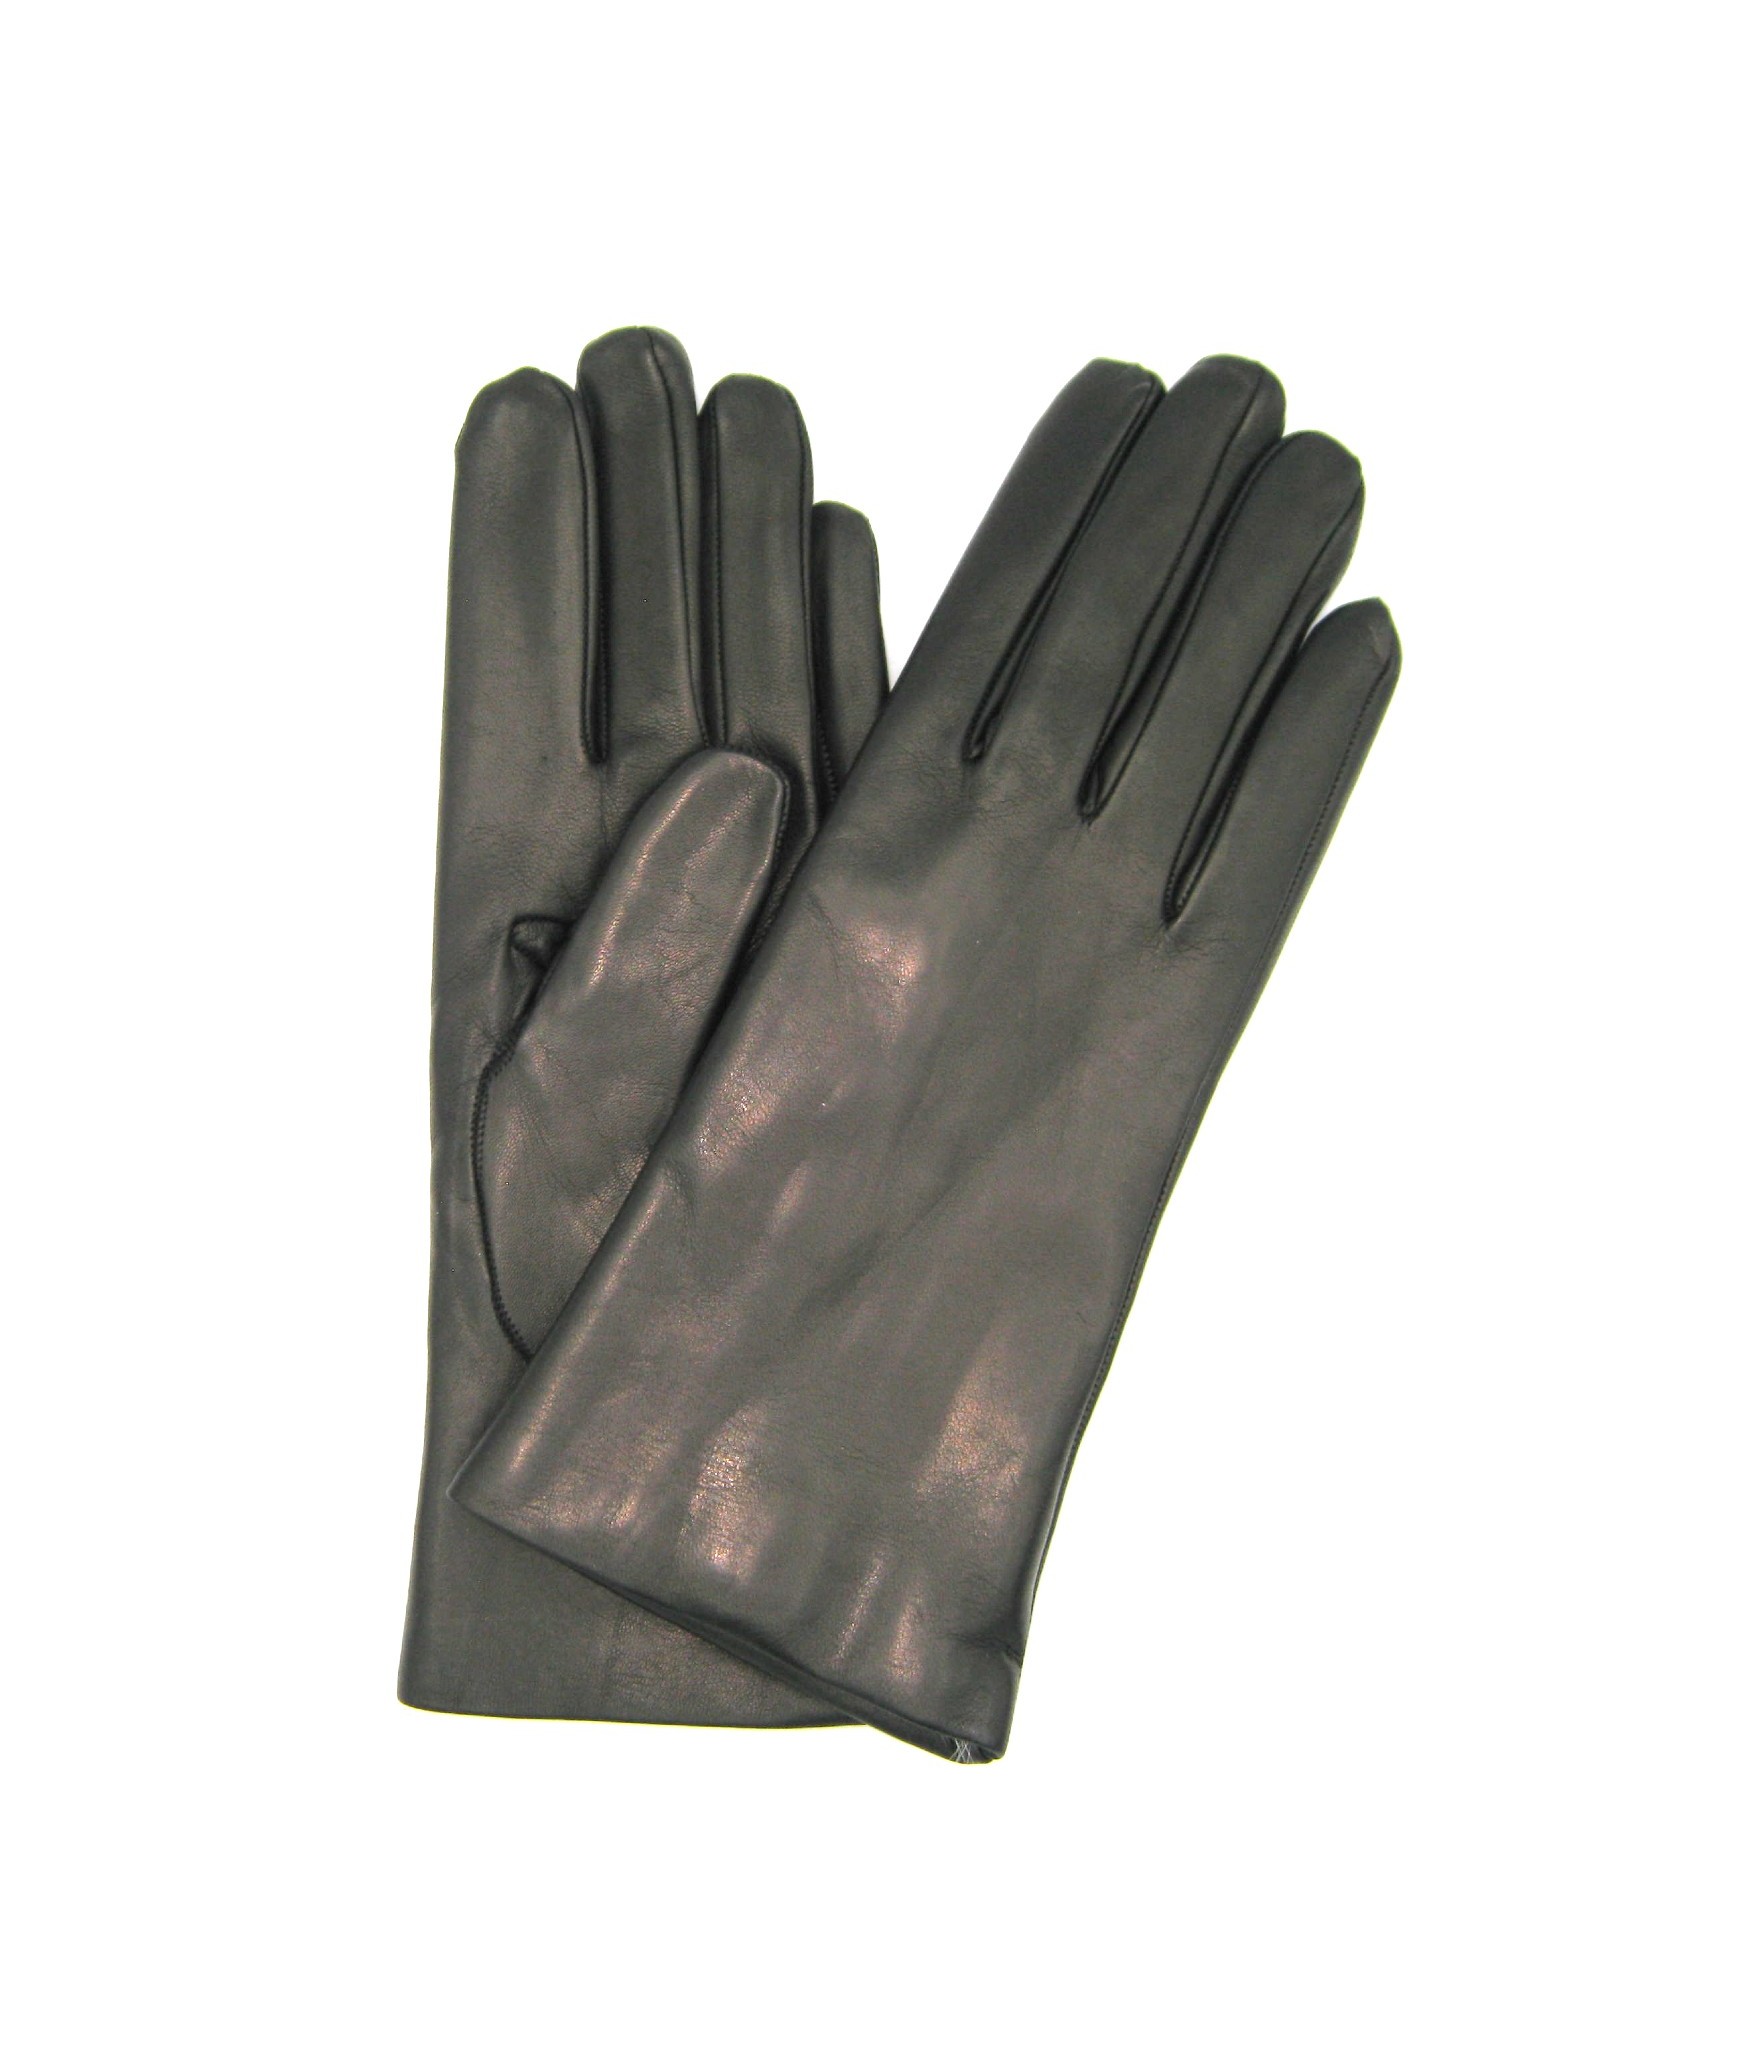 Nappa leather gloves 2bt Rabbit fur lined     Black